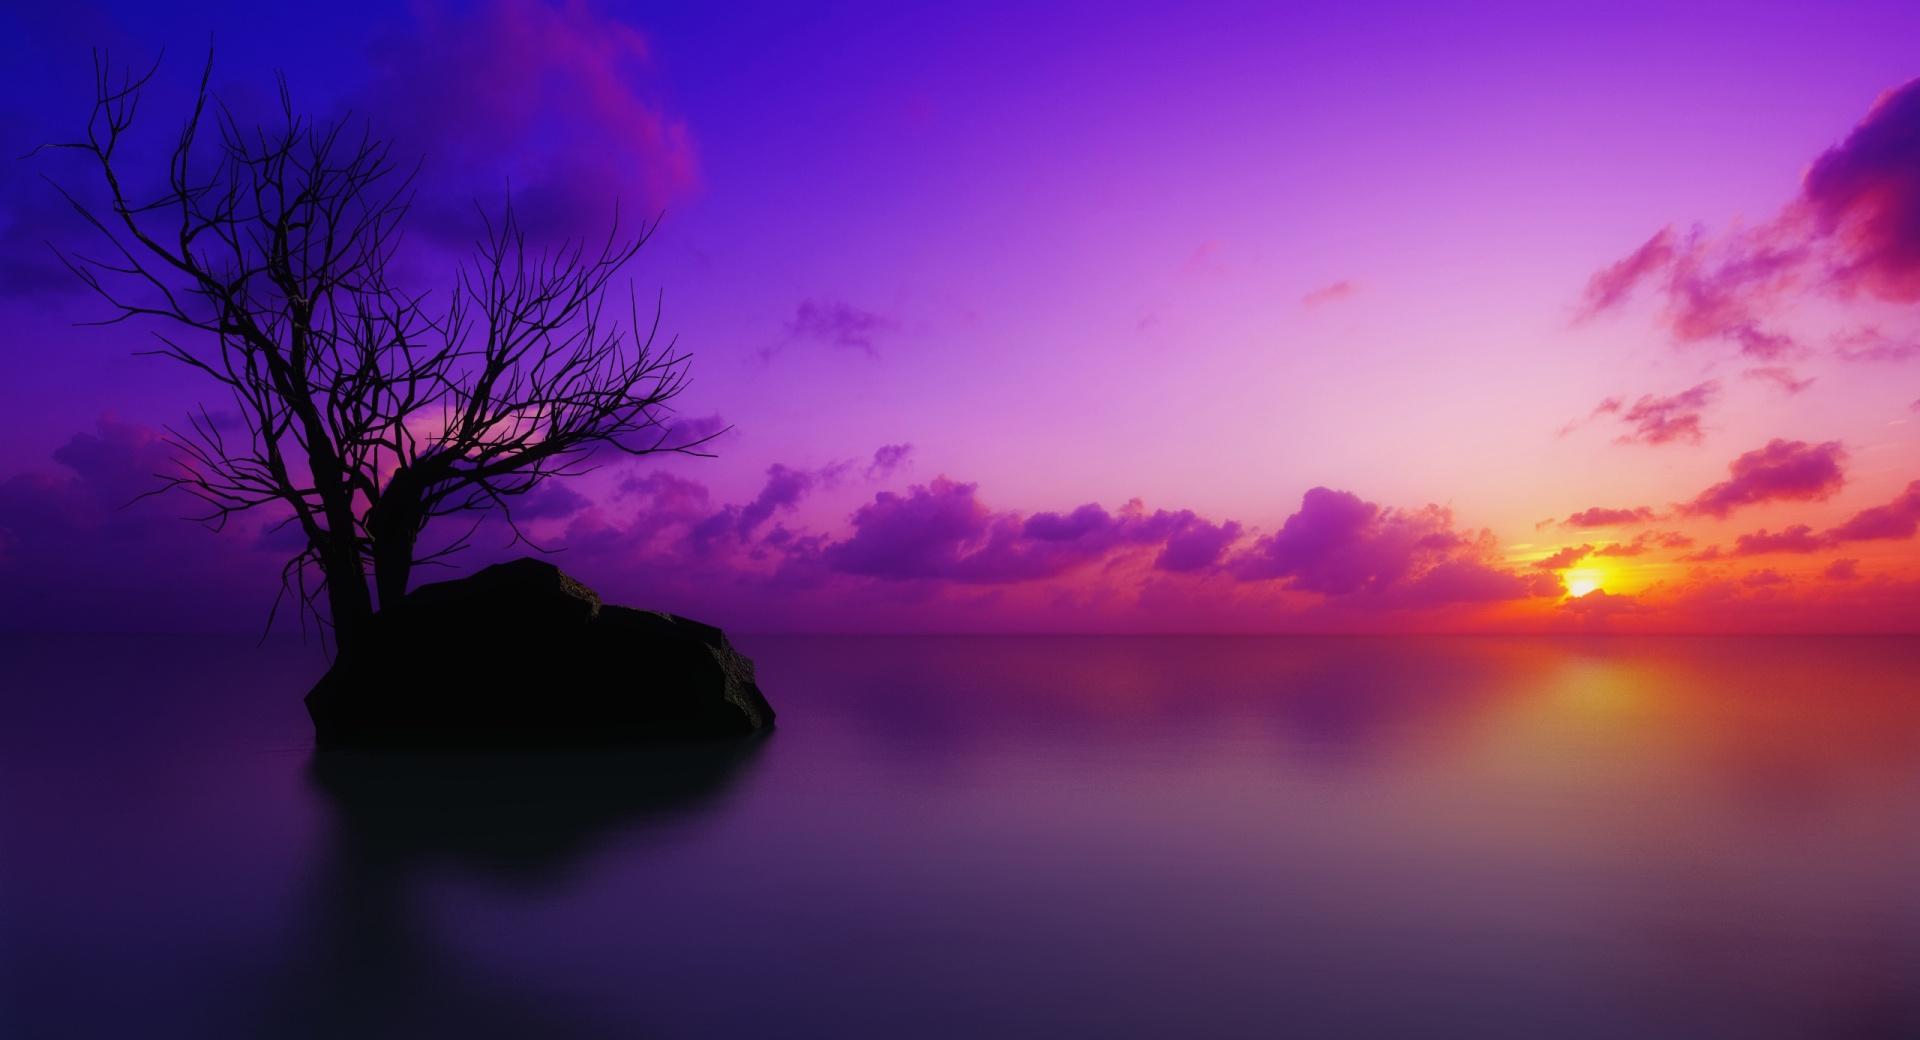 Maldivian Sunset at 1024 x 768 size wallpapers HD quality